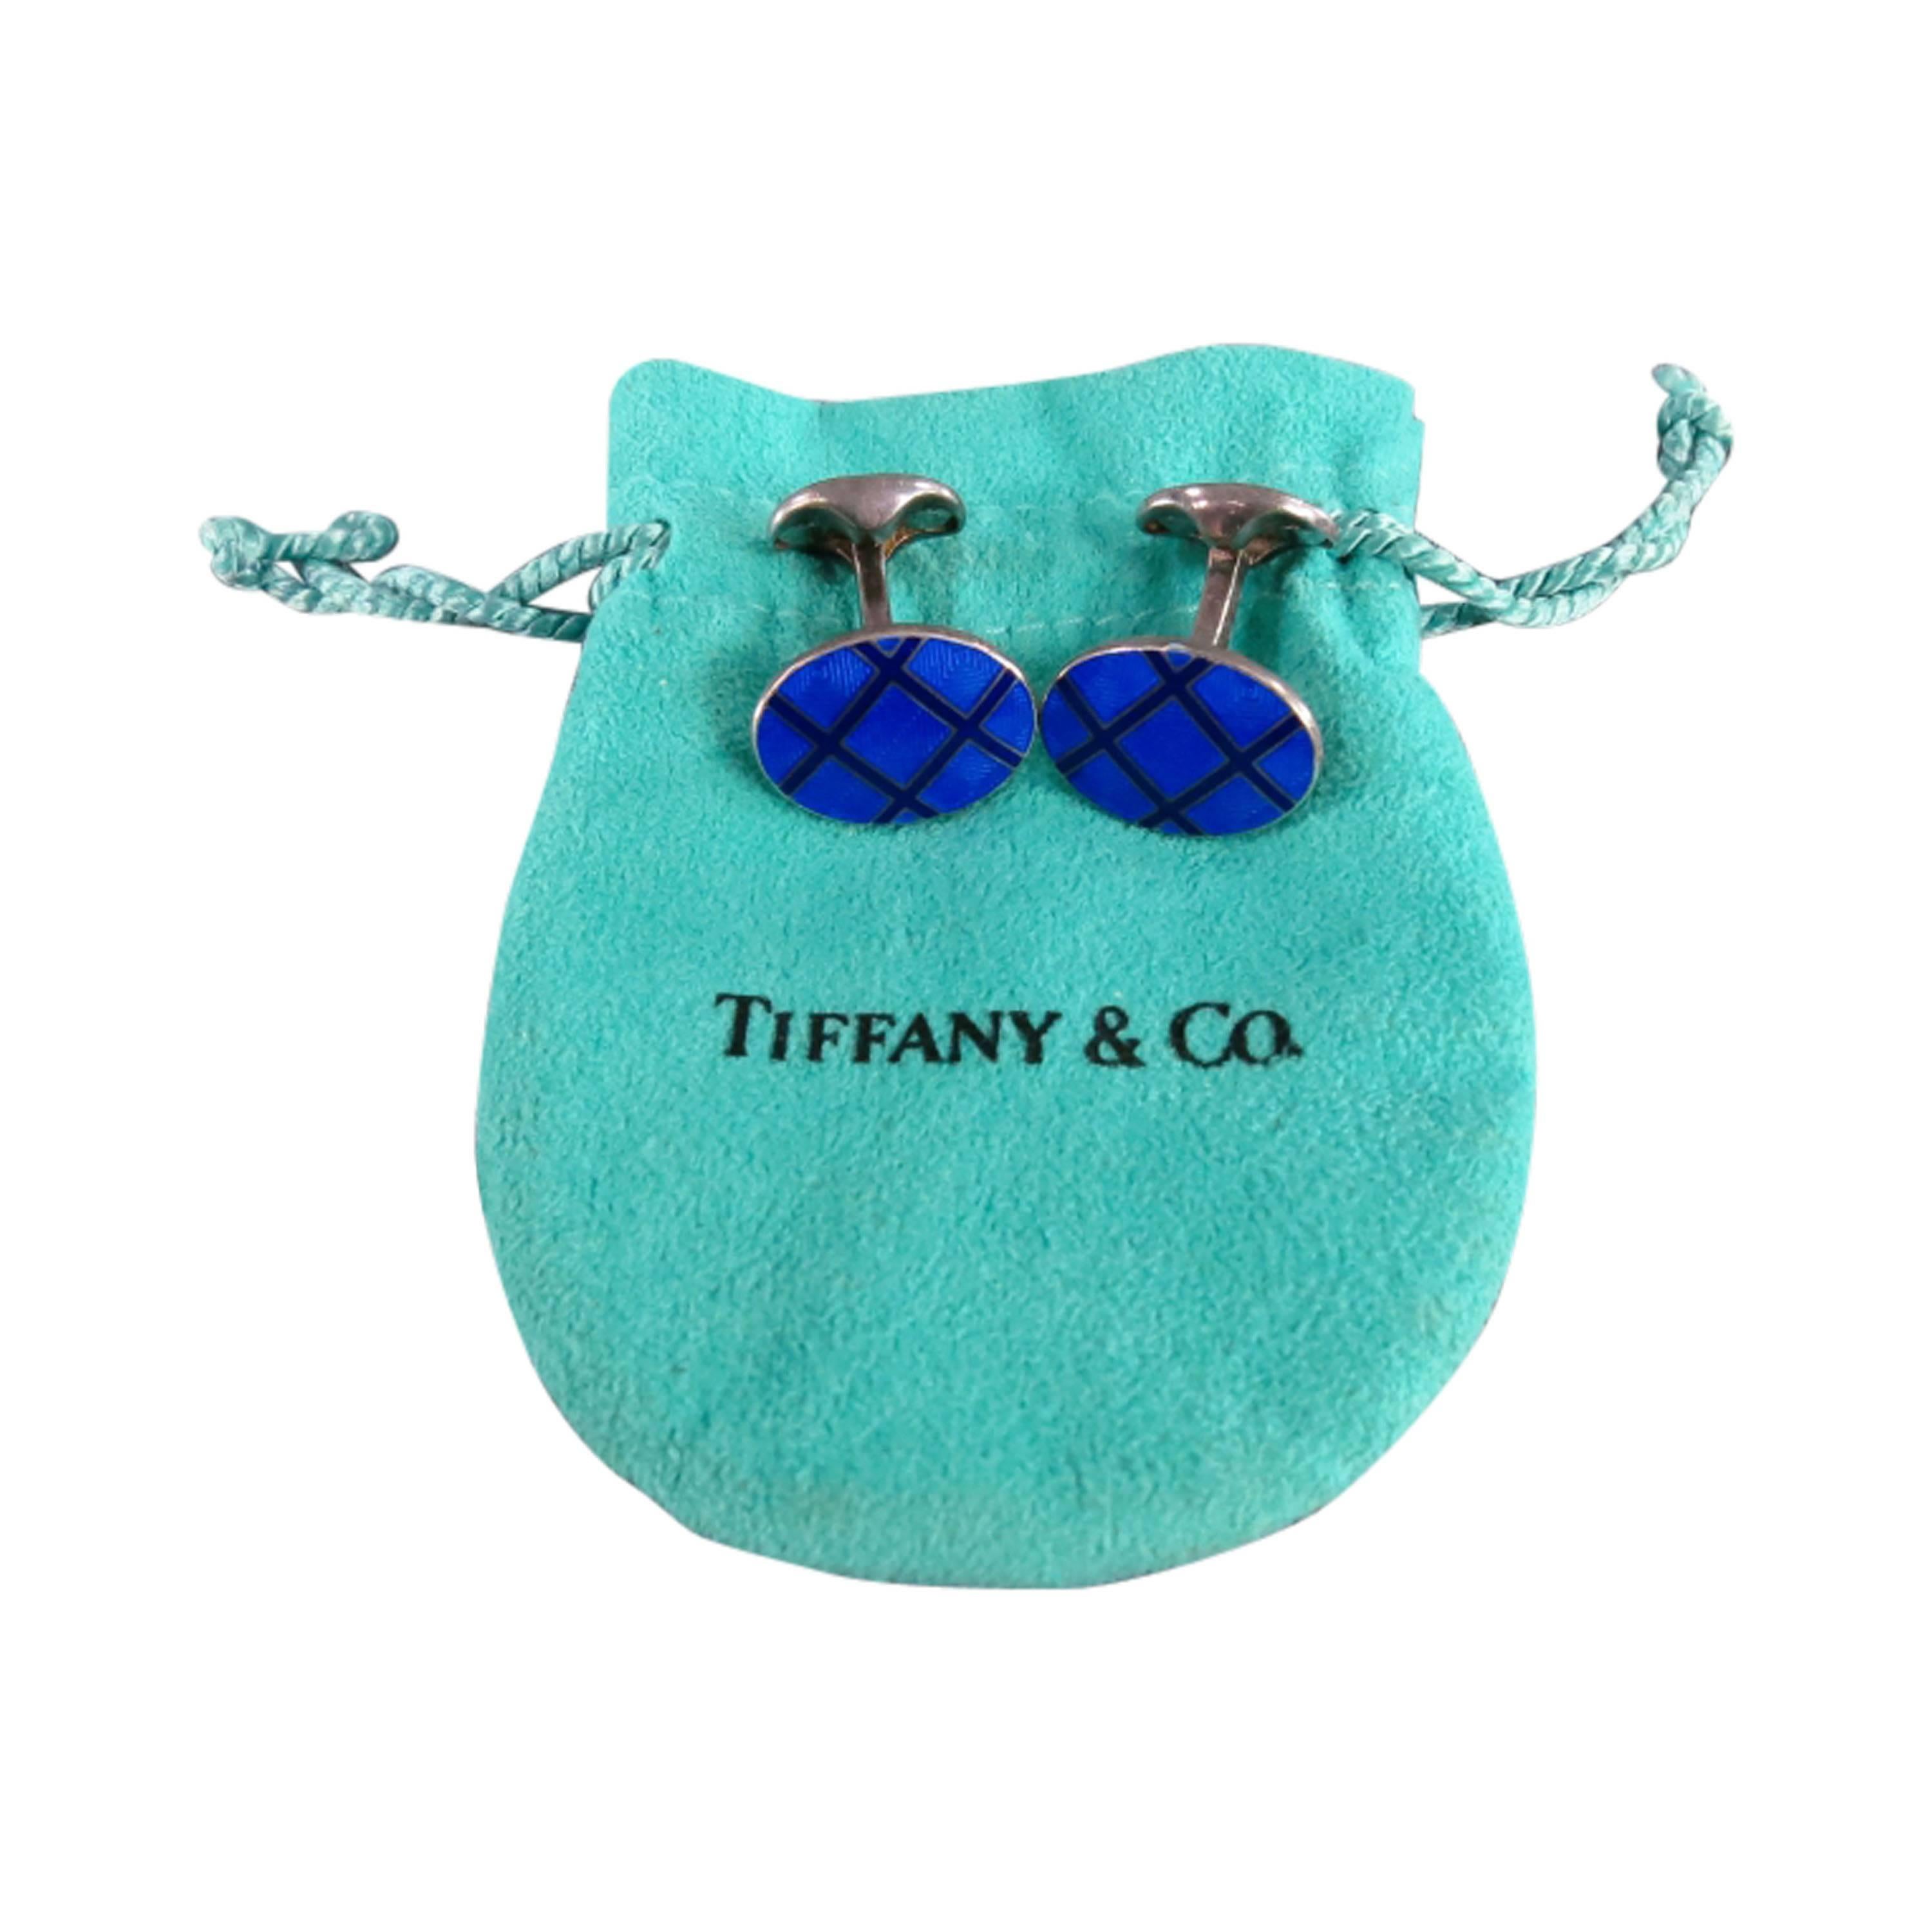 TIFFANY & CO. Blue Sterling Silver Oval Stripe Cuff Links